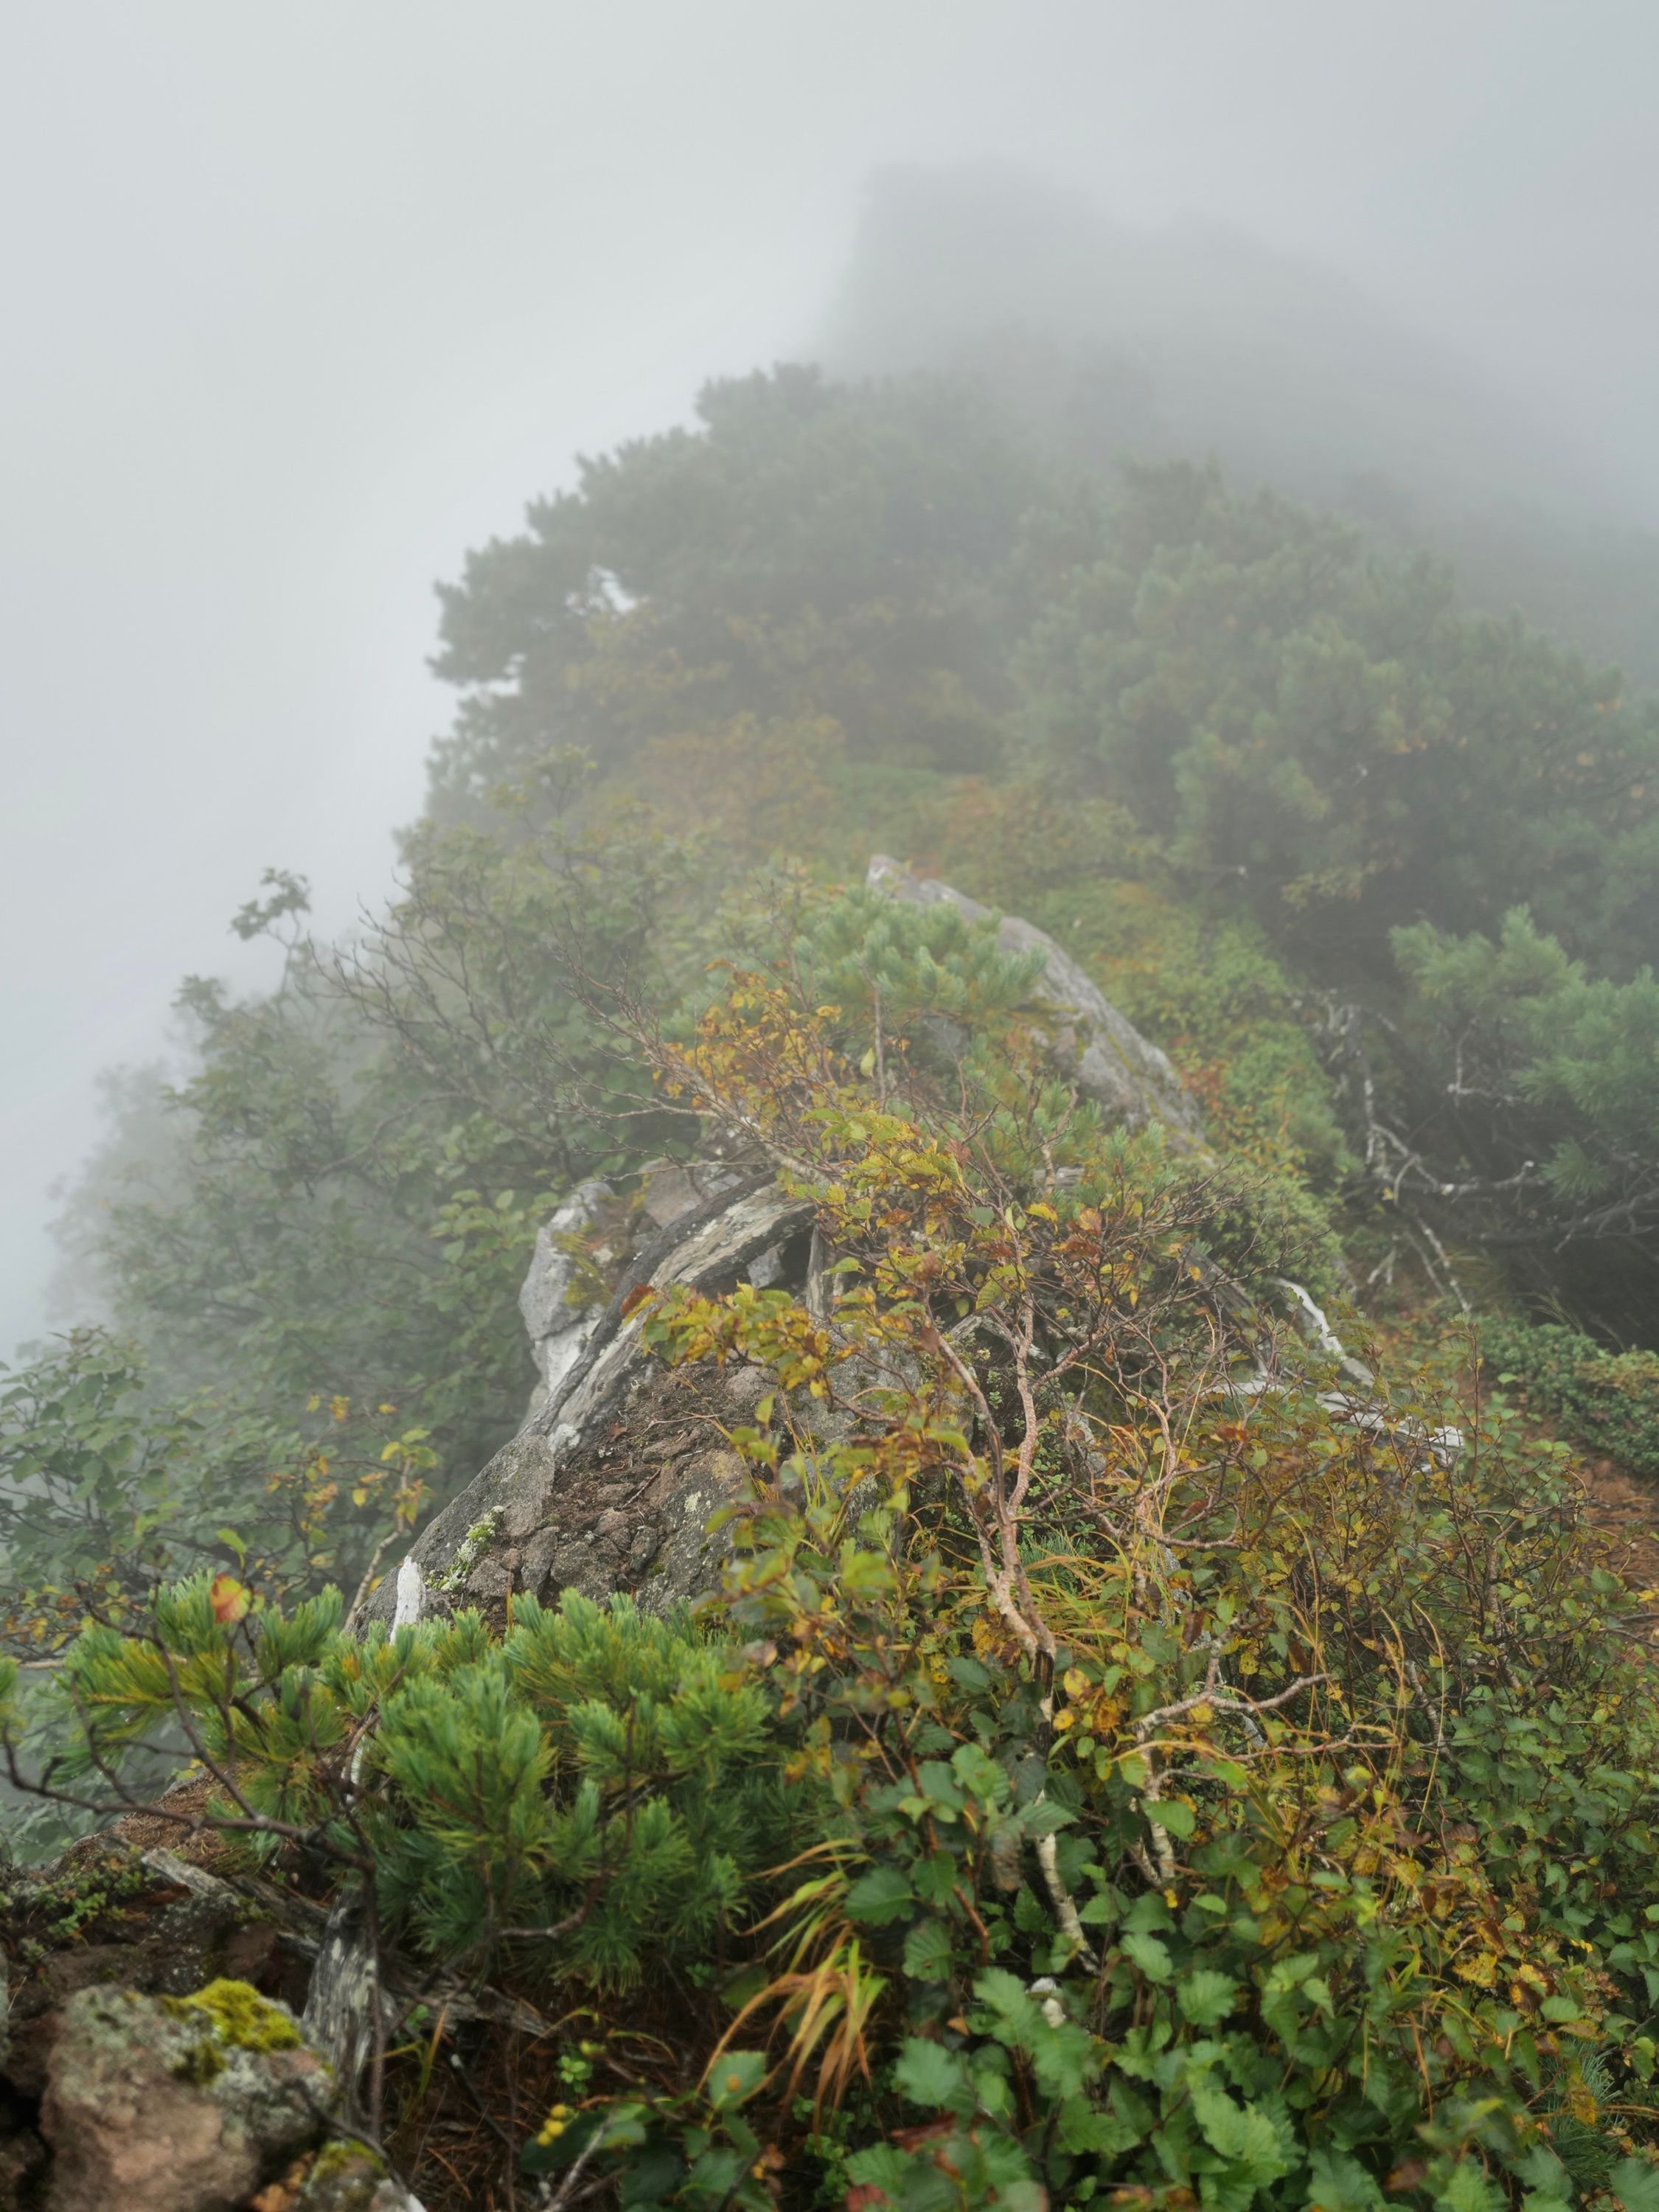 Stunted plants grow on an exposed mountain ridge in the fog